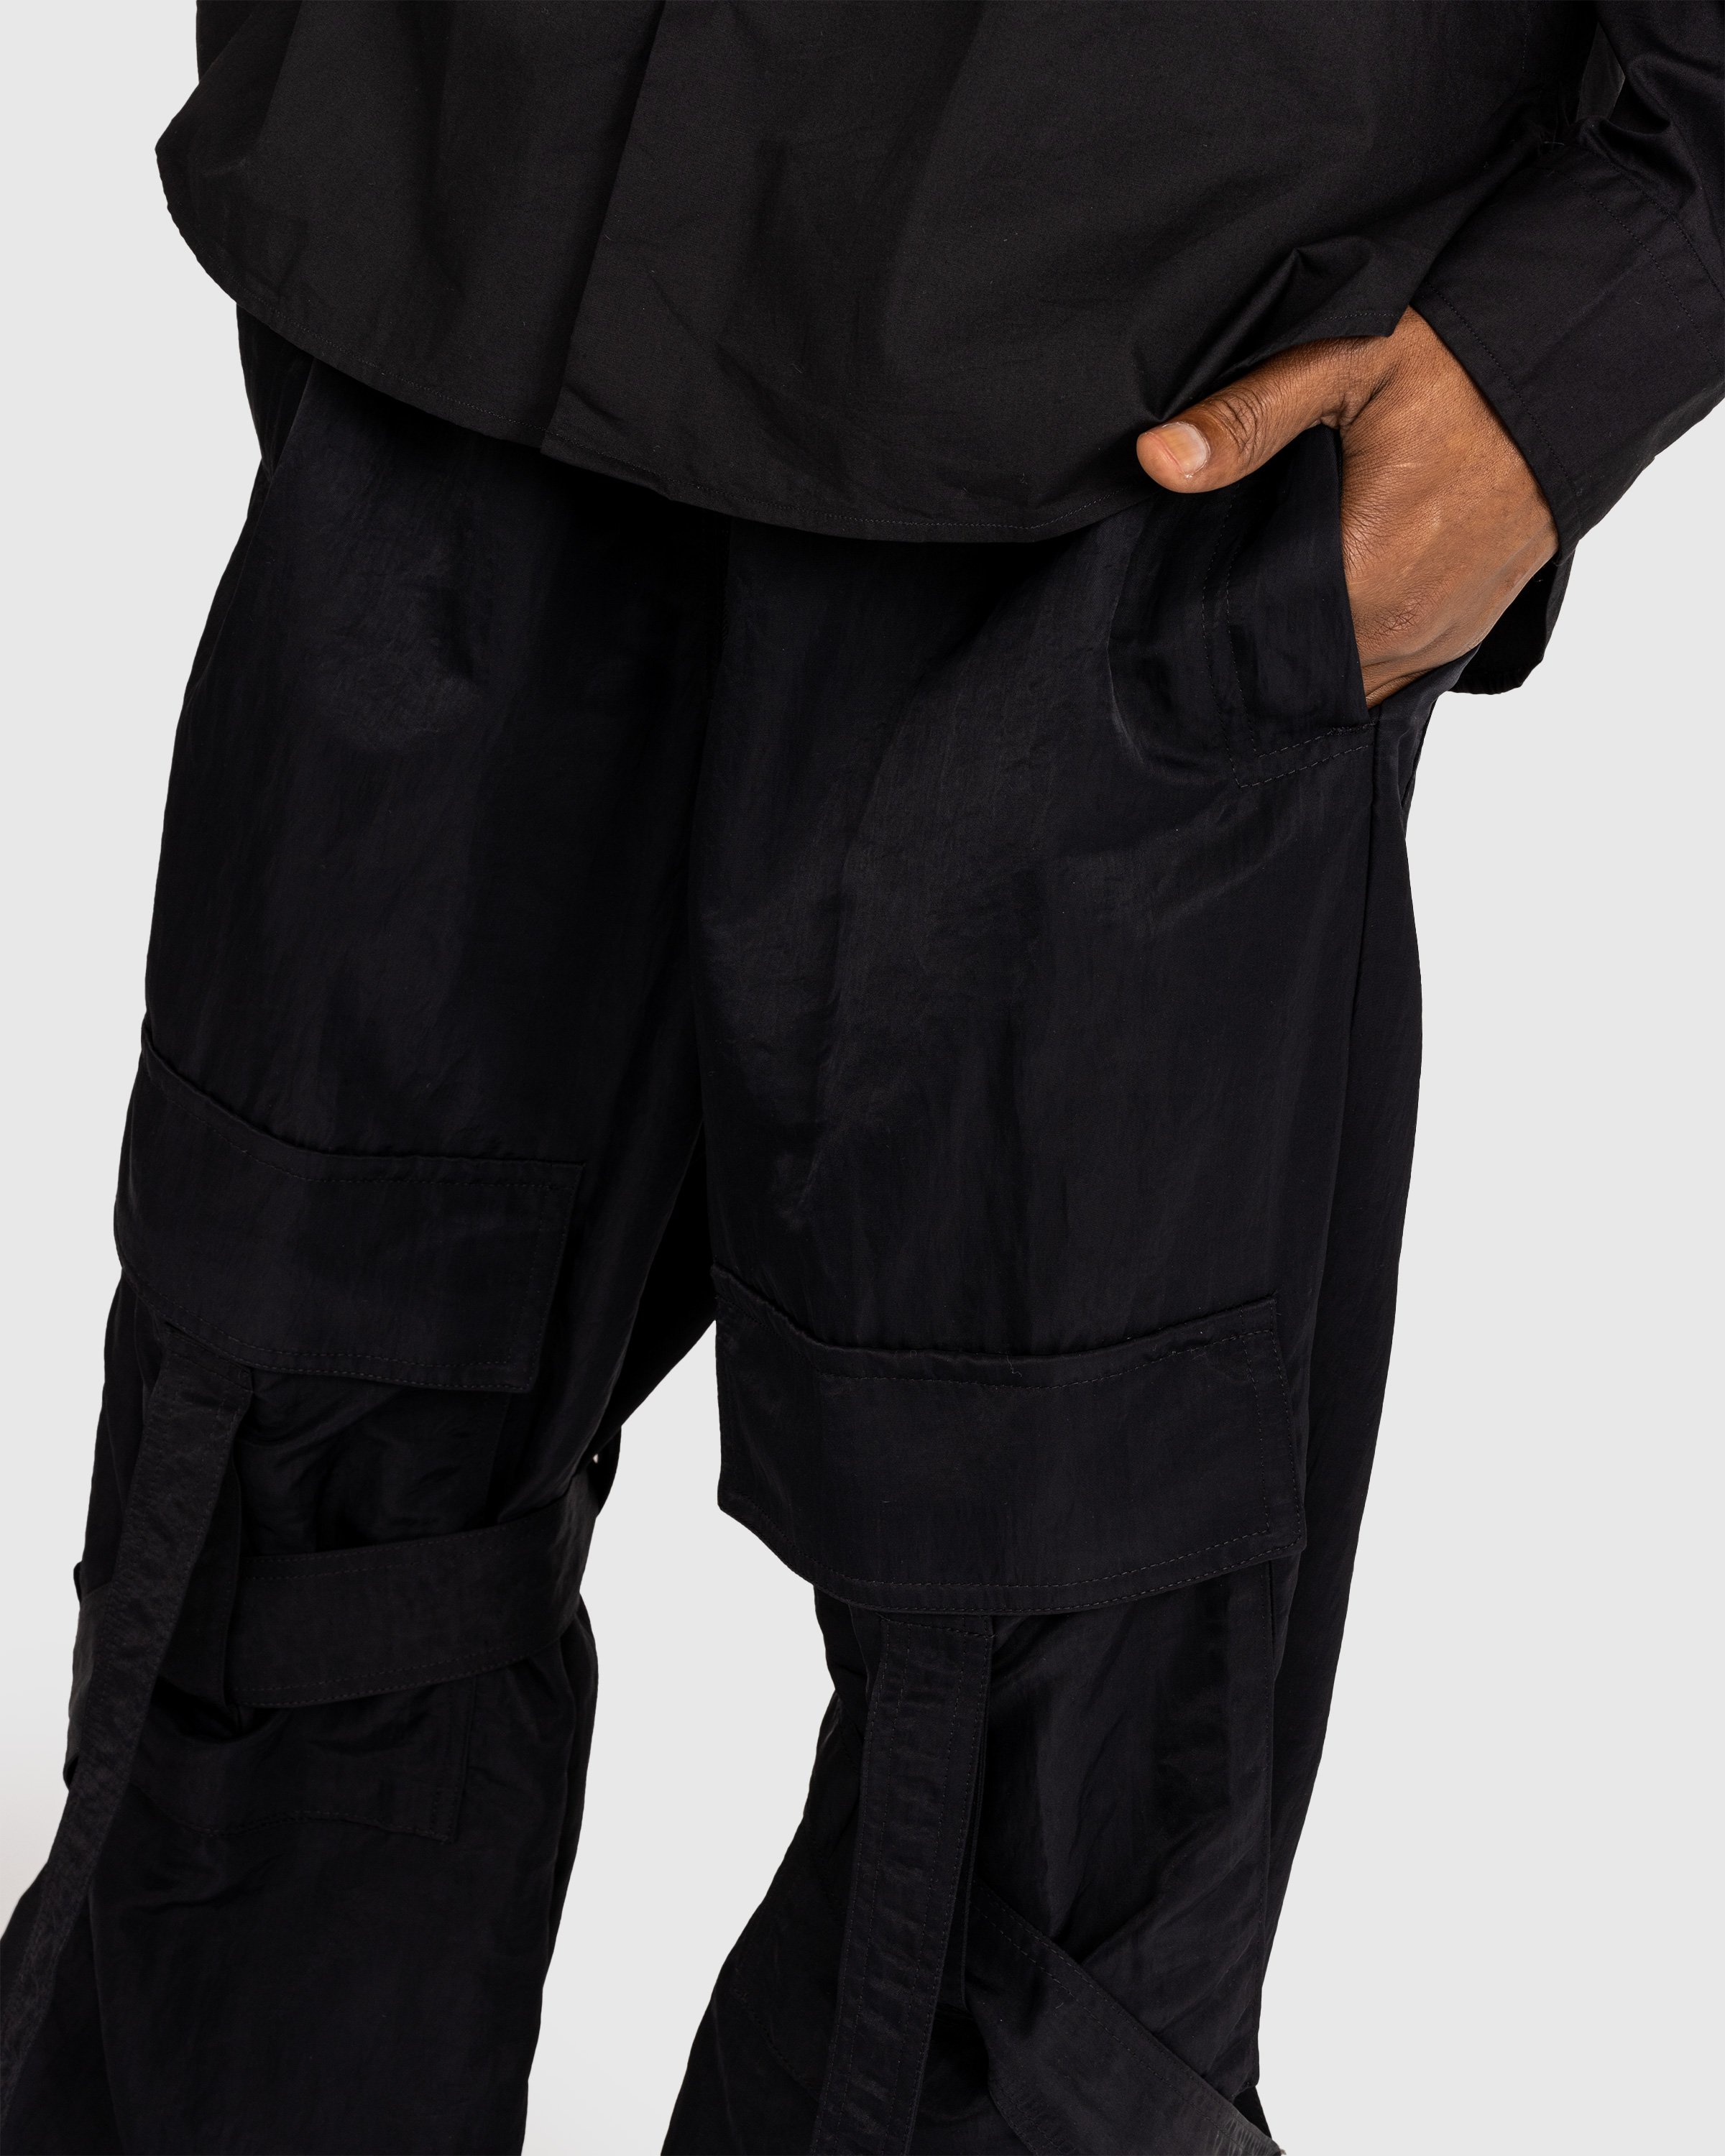 Dries van Noten - Primo Tape Pants Black - Clothing - Black - Image 4